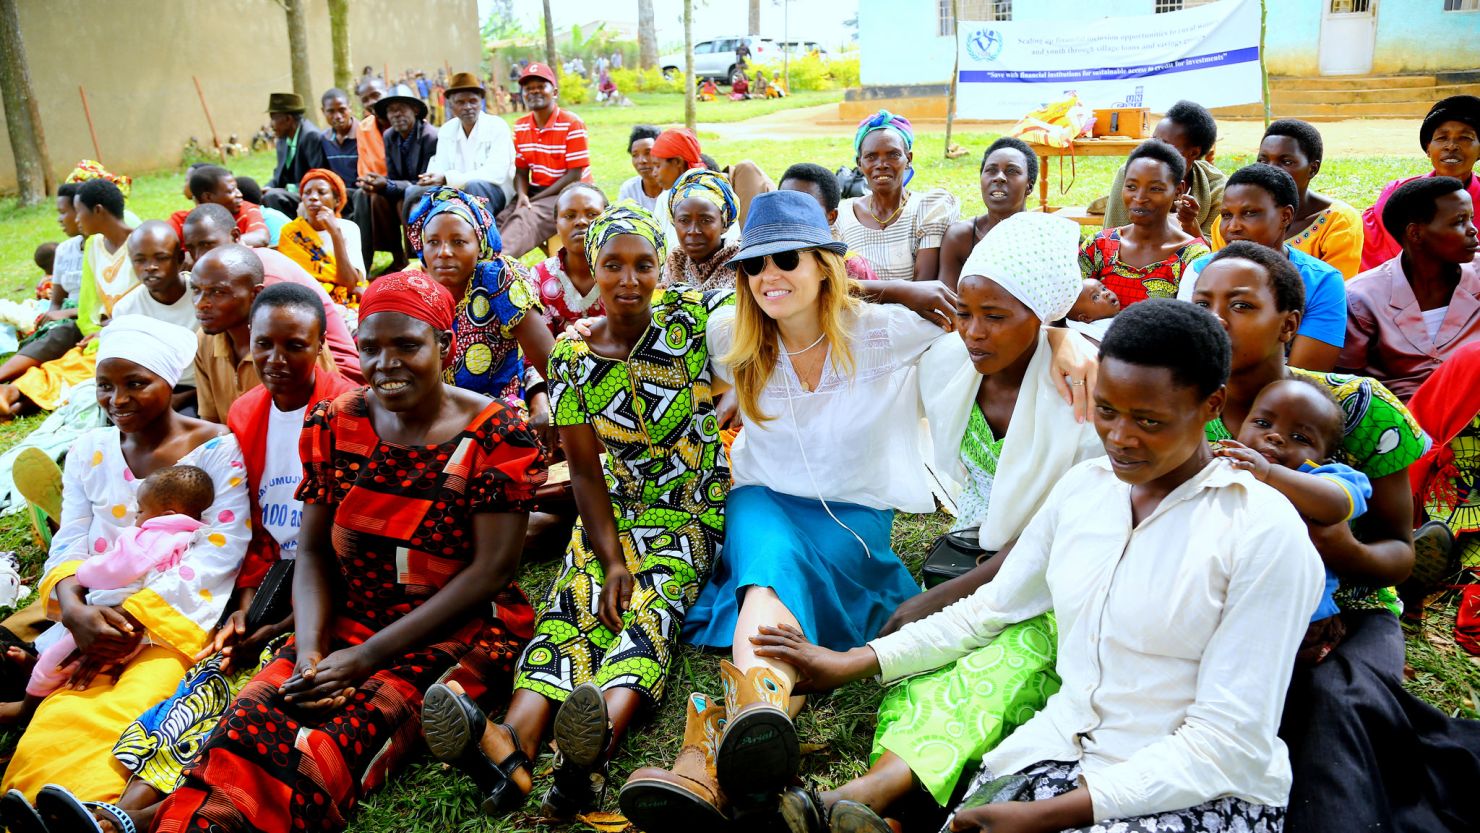 UNDP Goodwill Ambassador Connie Britton visits with women in Rwanda in June 2015.